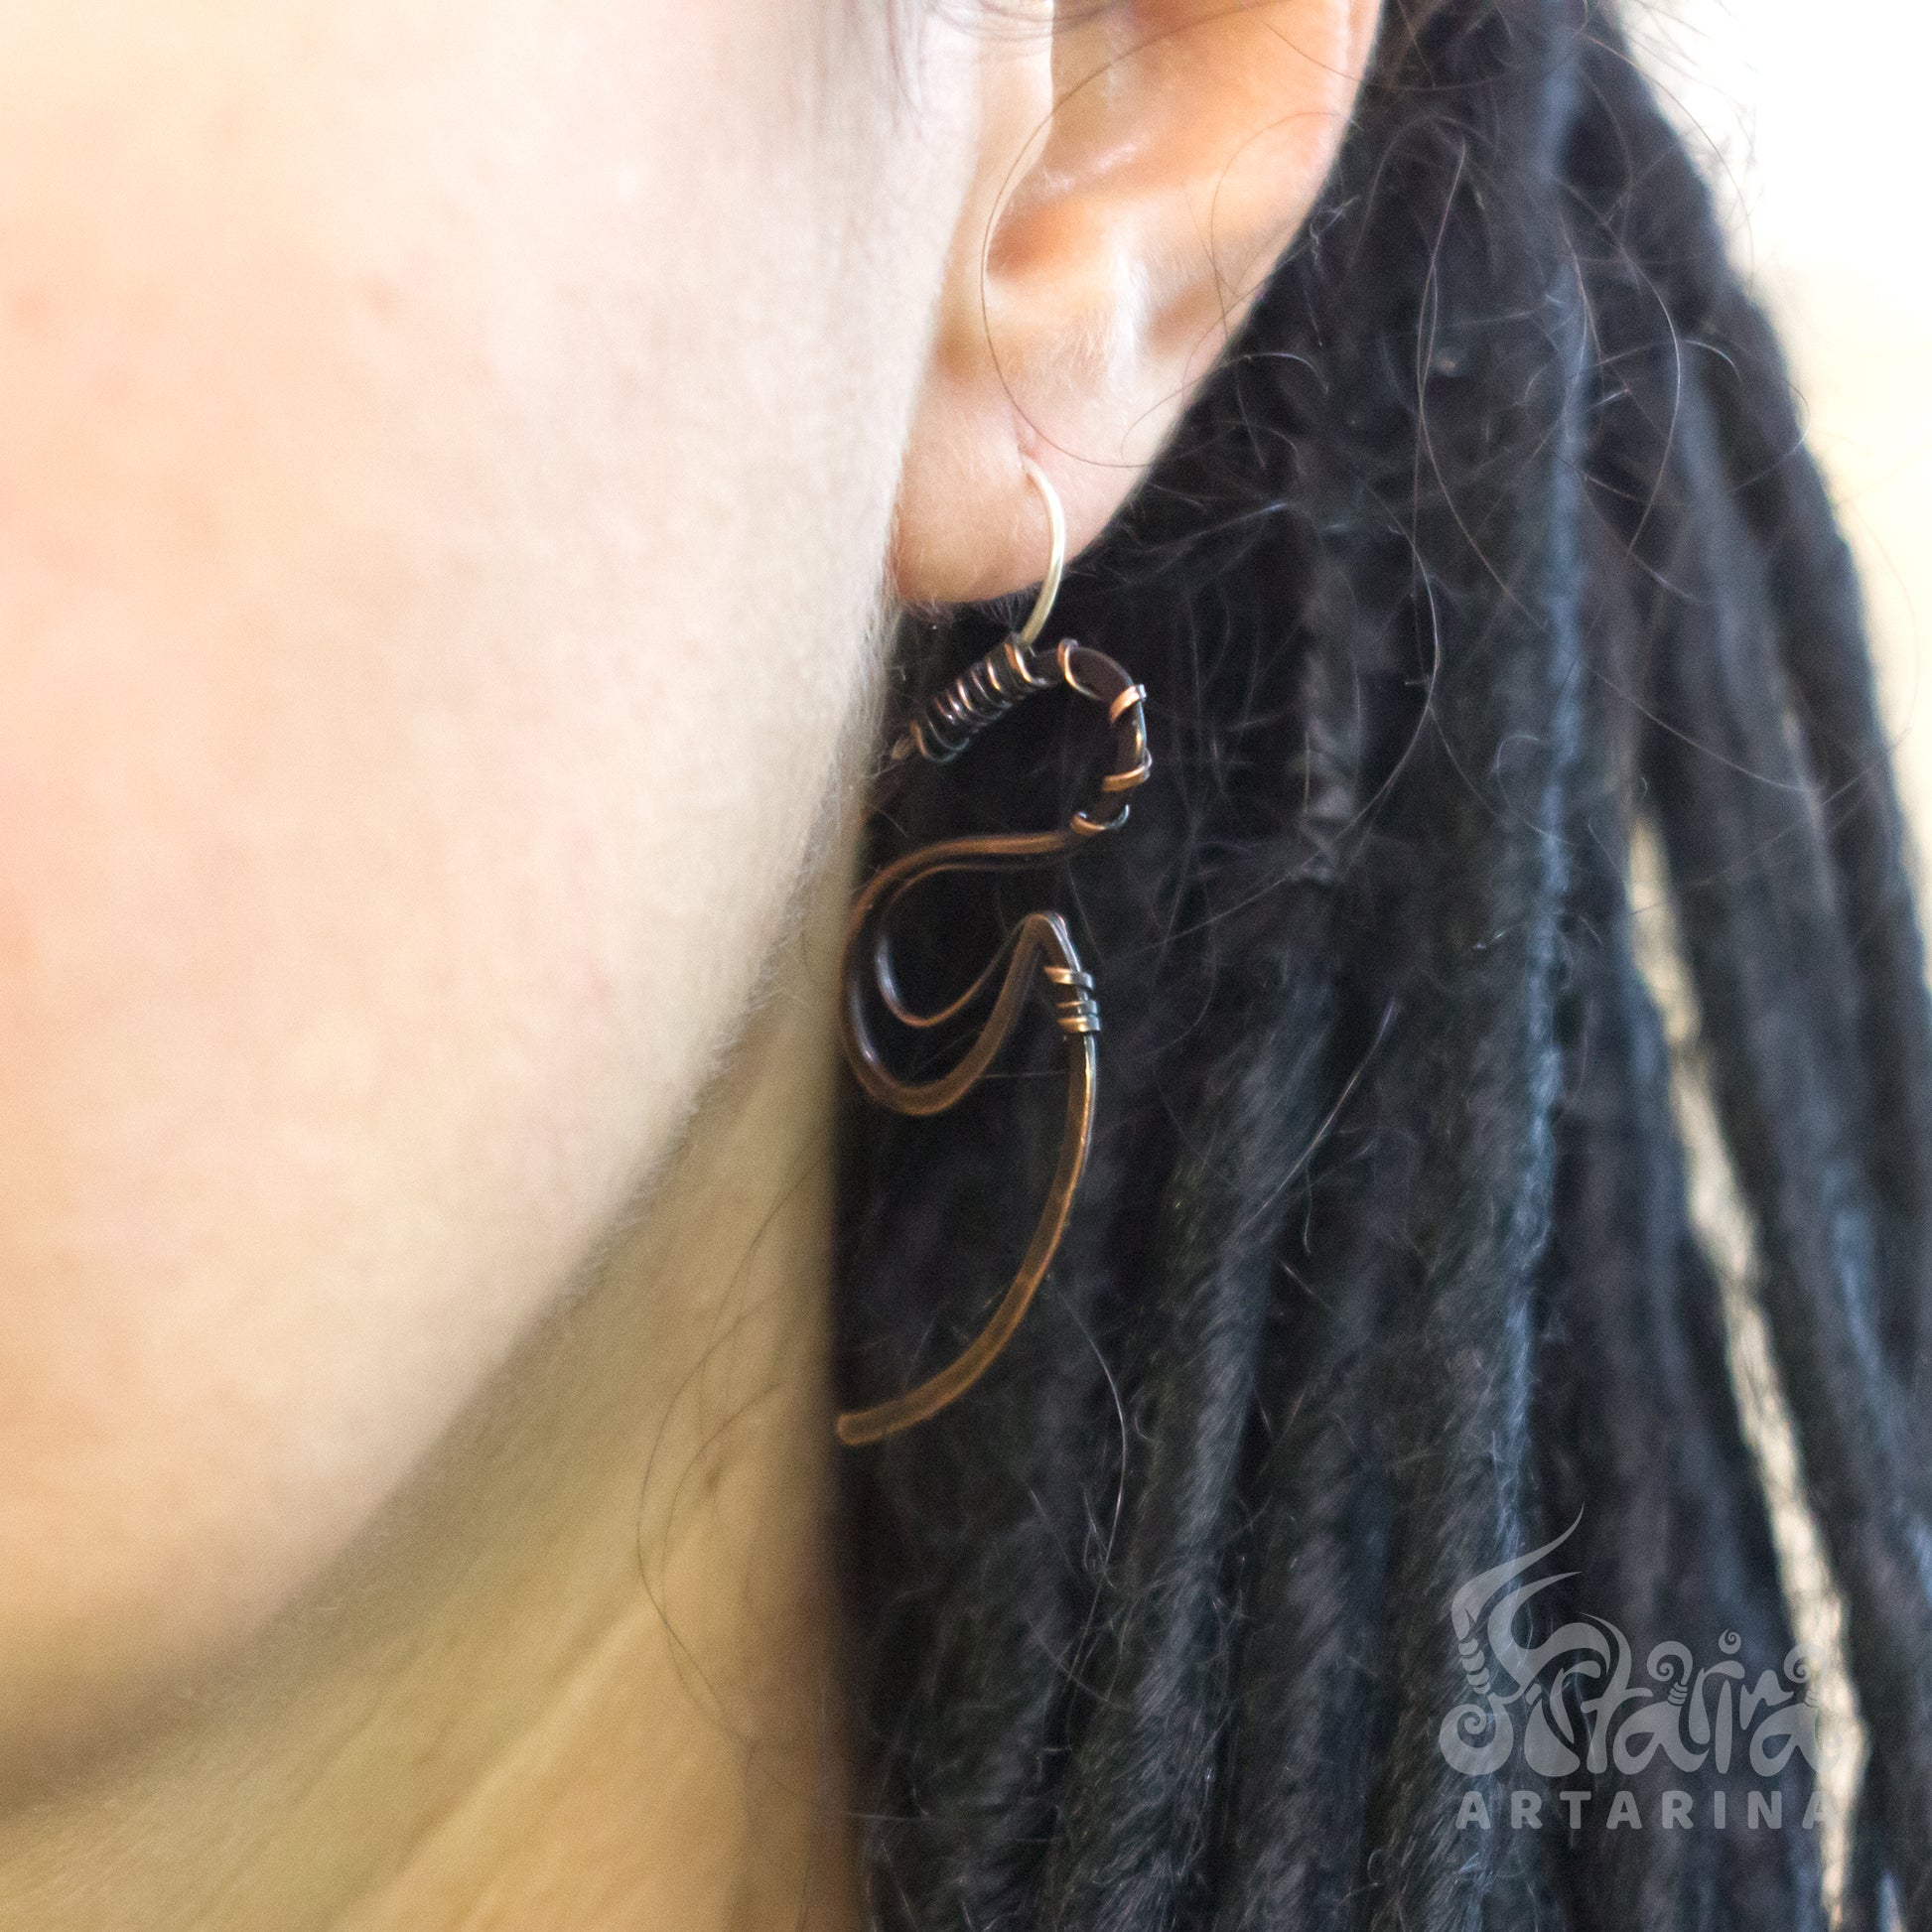 Dangle unique copper wire earrings / Rustic handmade abstract earrings